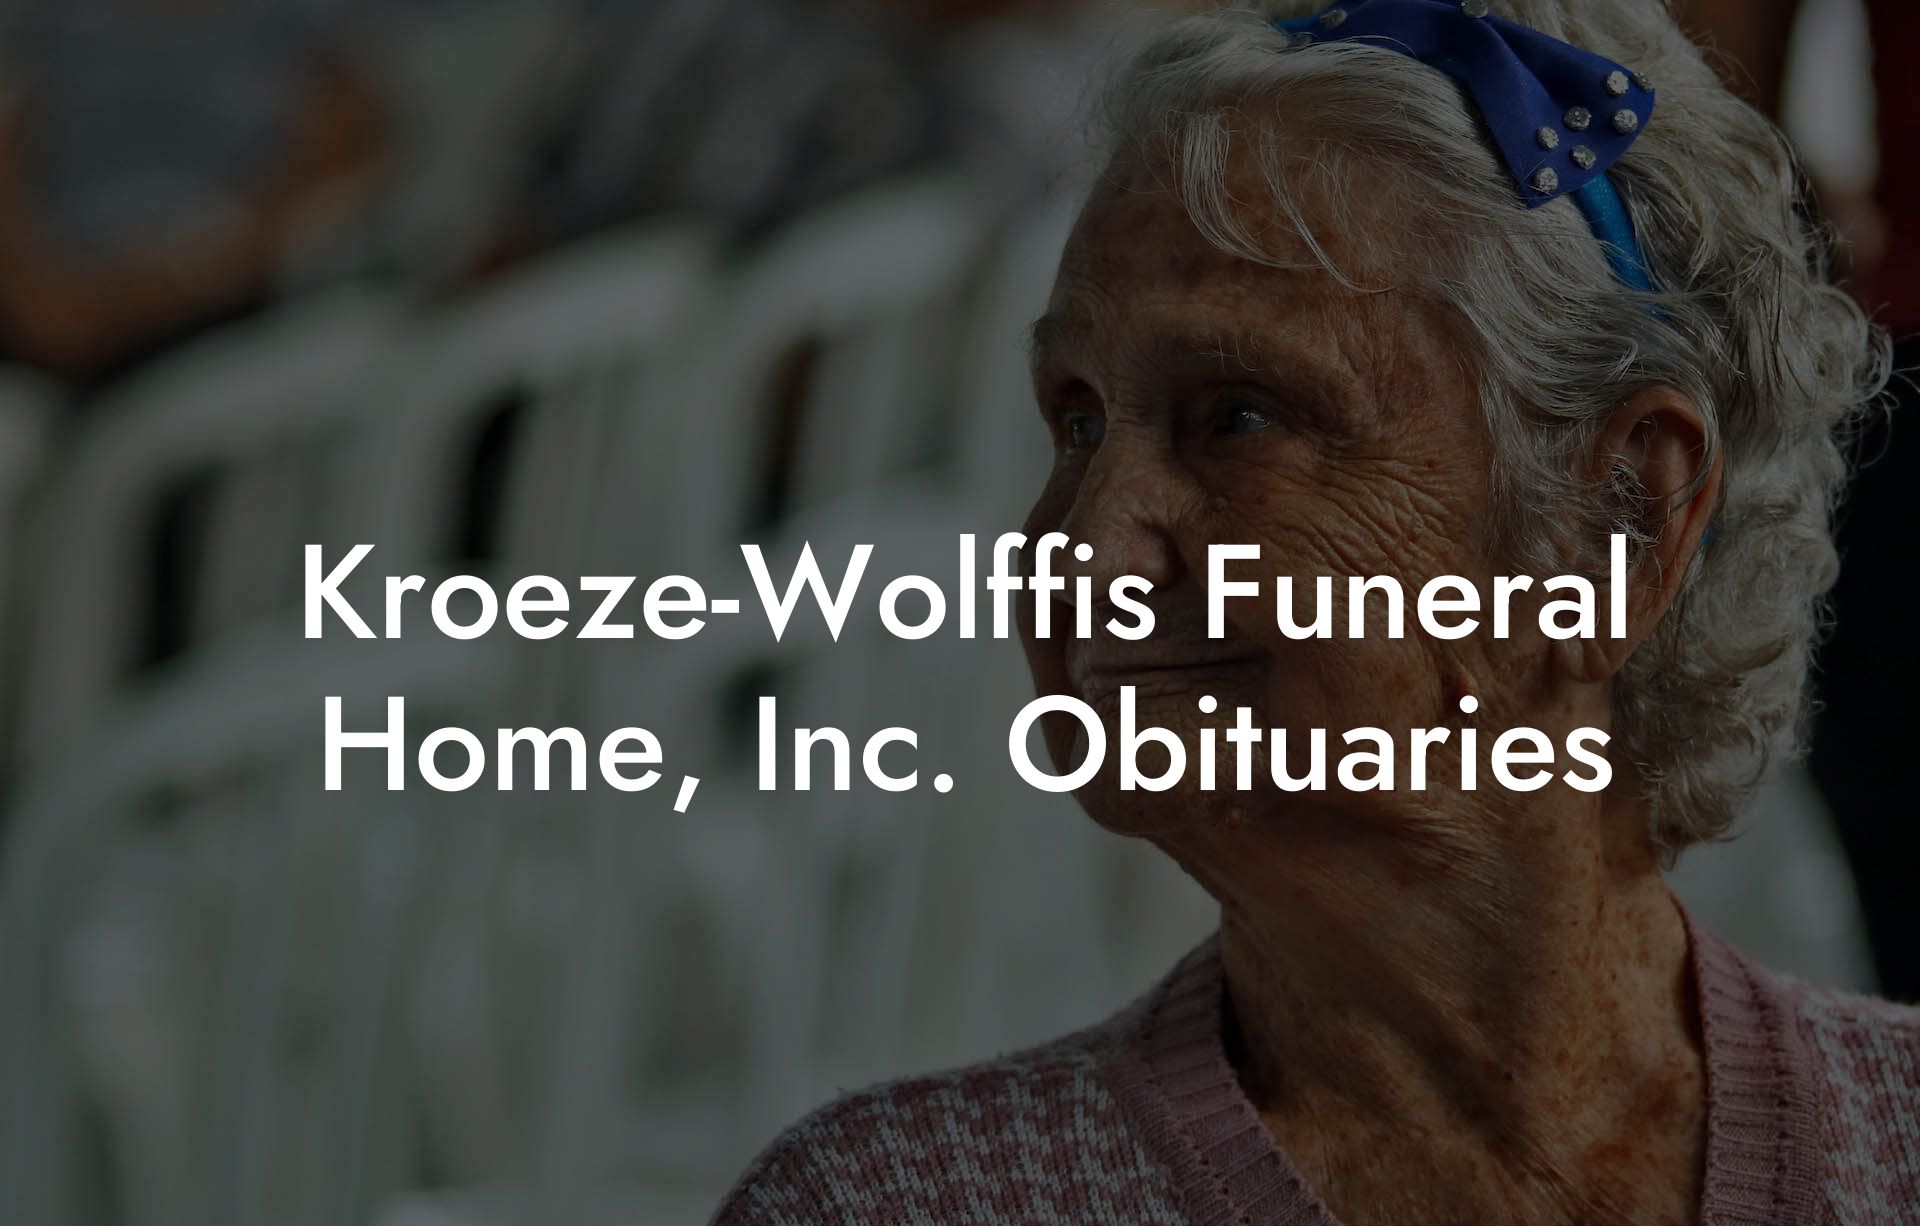 Kroeze-Wolffis Funeral Home, Inc. Obituaries